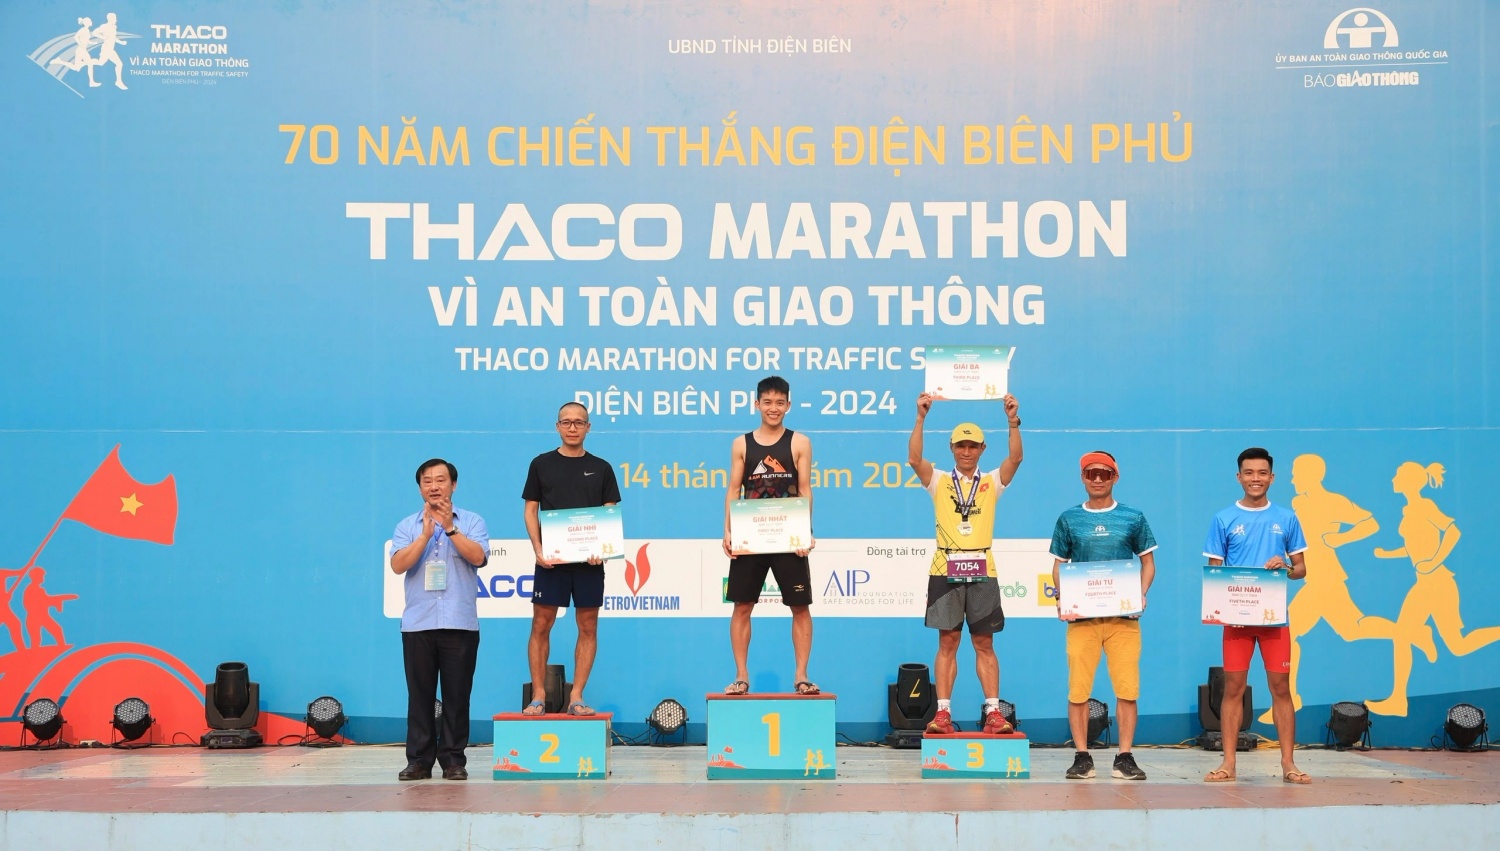 petrovietnam dong hanh cung giai chay thaco marathon vi an toan giao thong  dien bien phu 2024 hinh 13